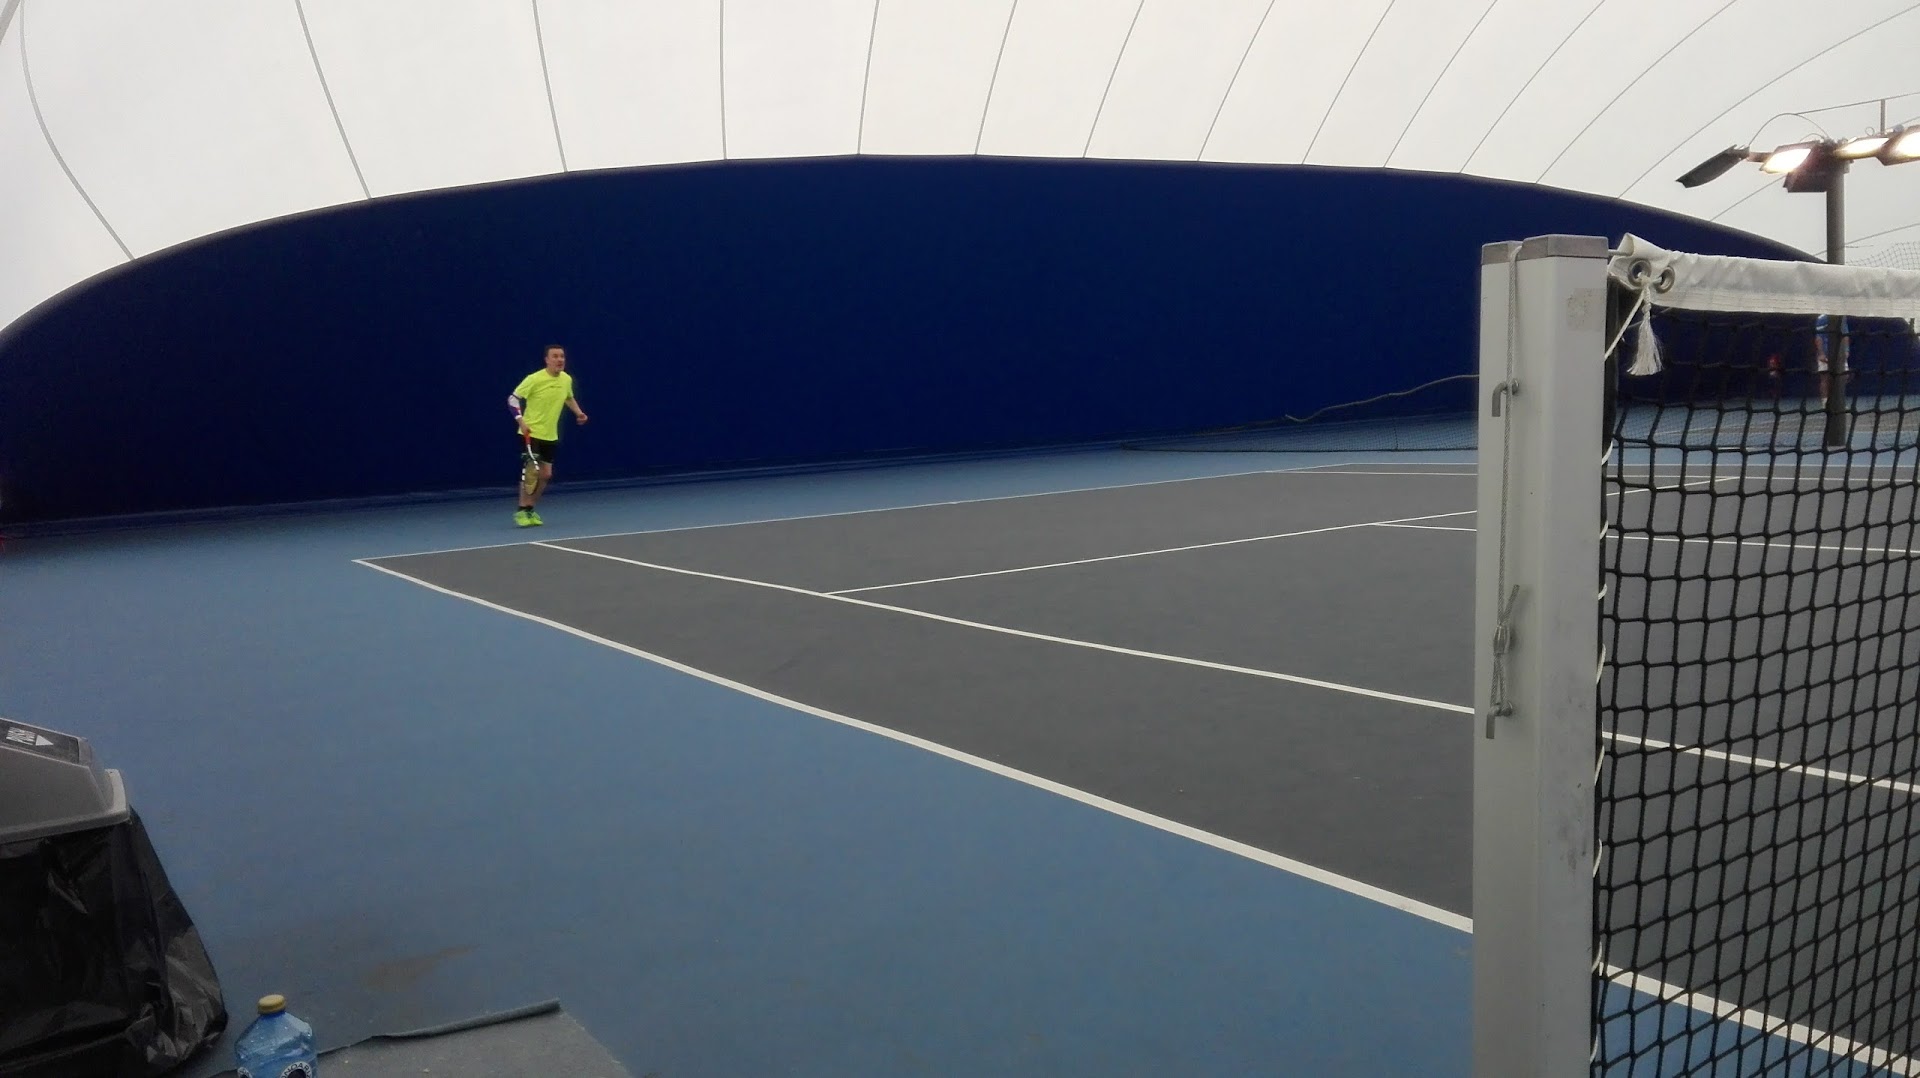 Squash Santiago Club de tenis